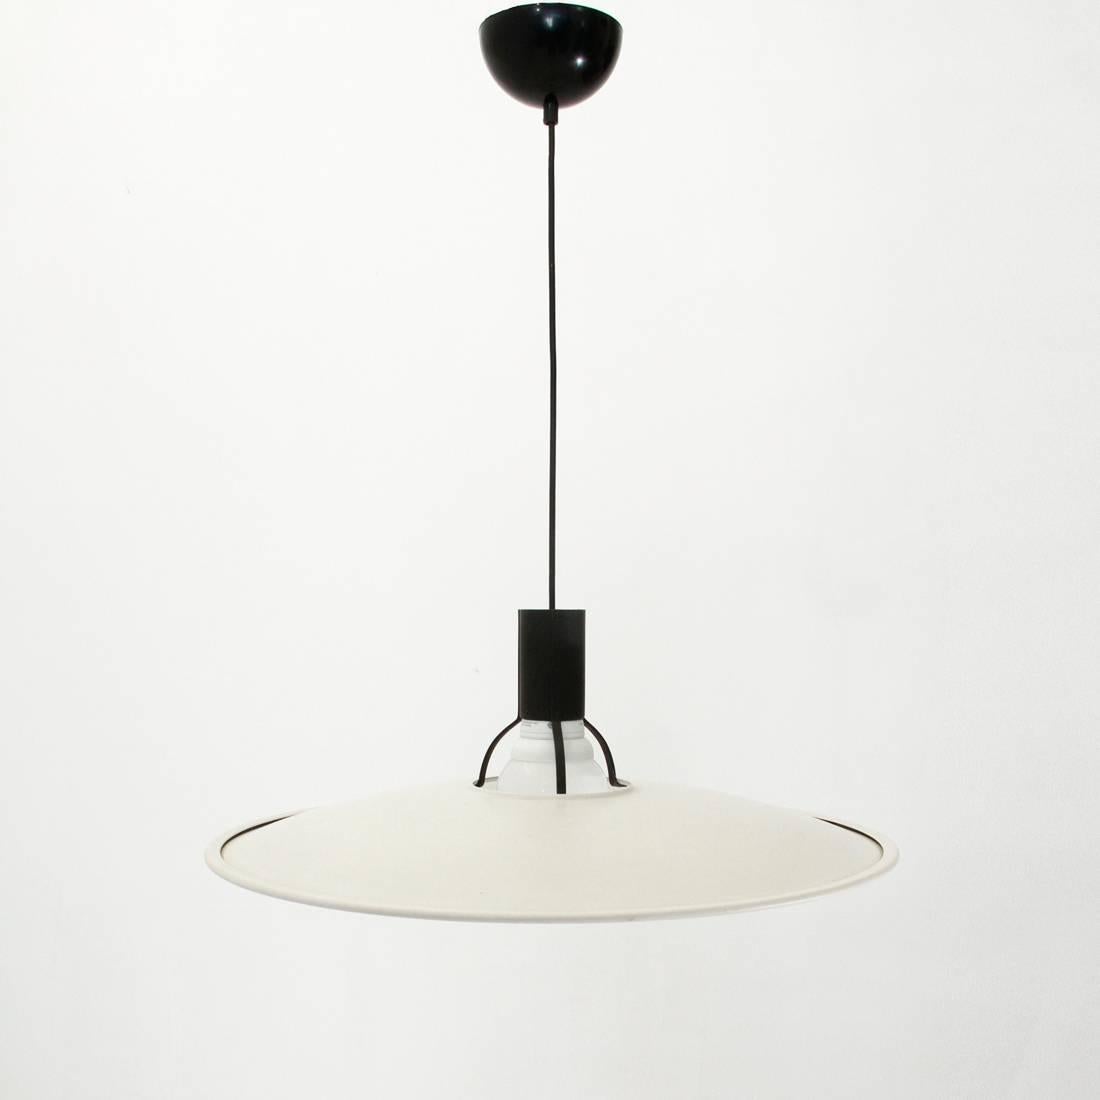 Italian Model 2133 Ceiling Lamp by Gino Sarfatti for Arteluce, 1970